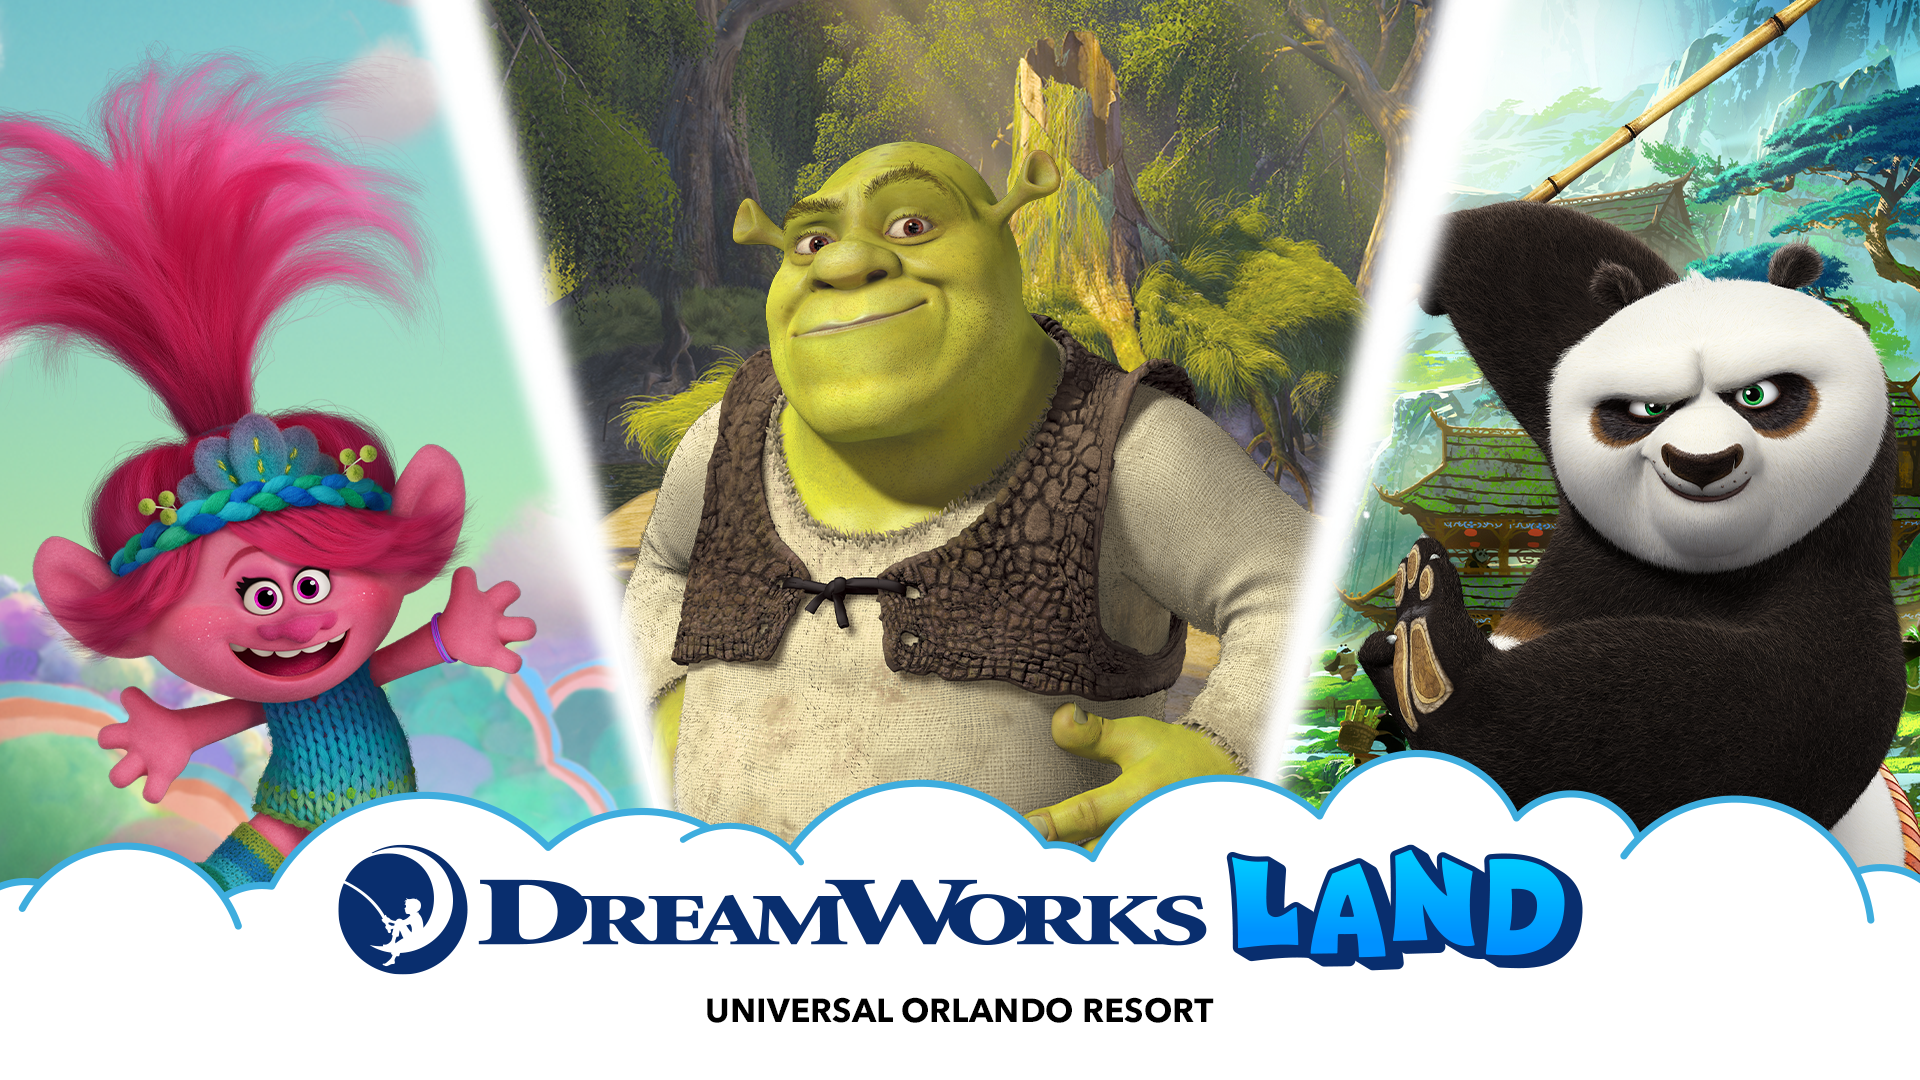 Universal Orlando shares new details on DreamWorks Land; opening Summer